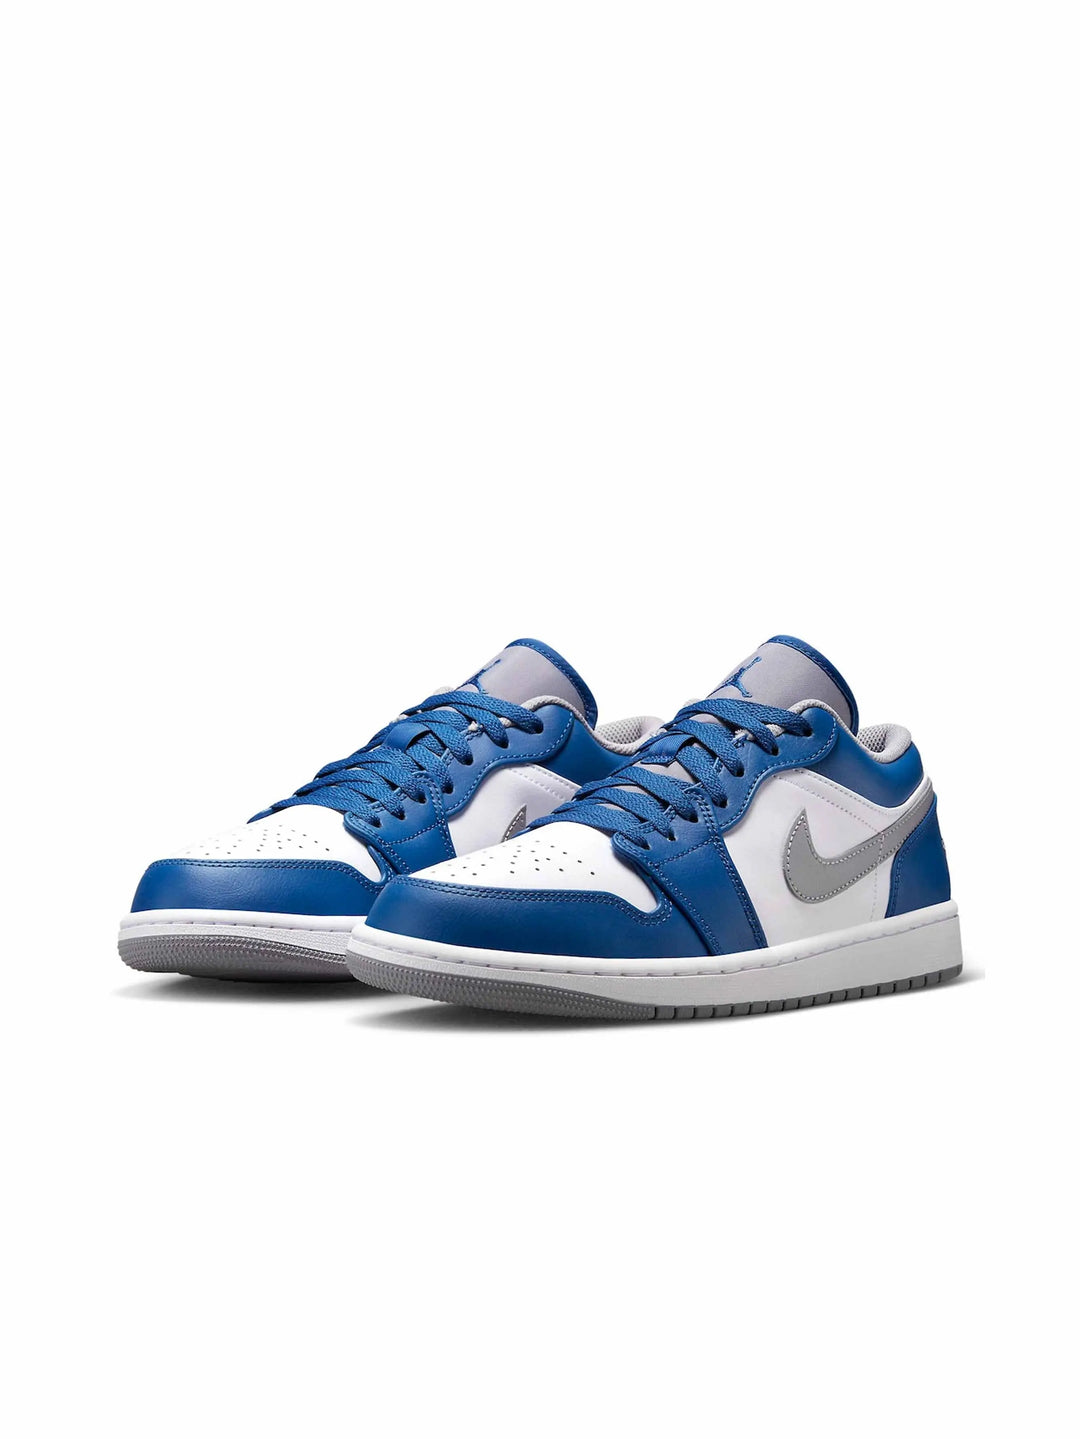 Nike Air Jordan 1 Low True Blue Prior